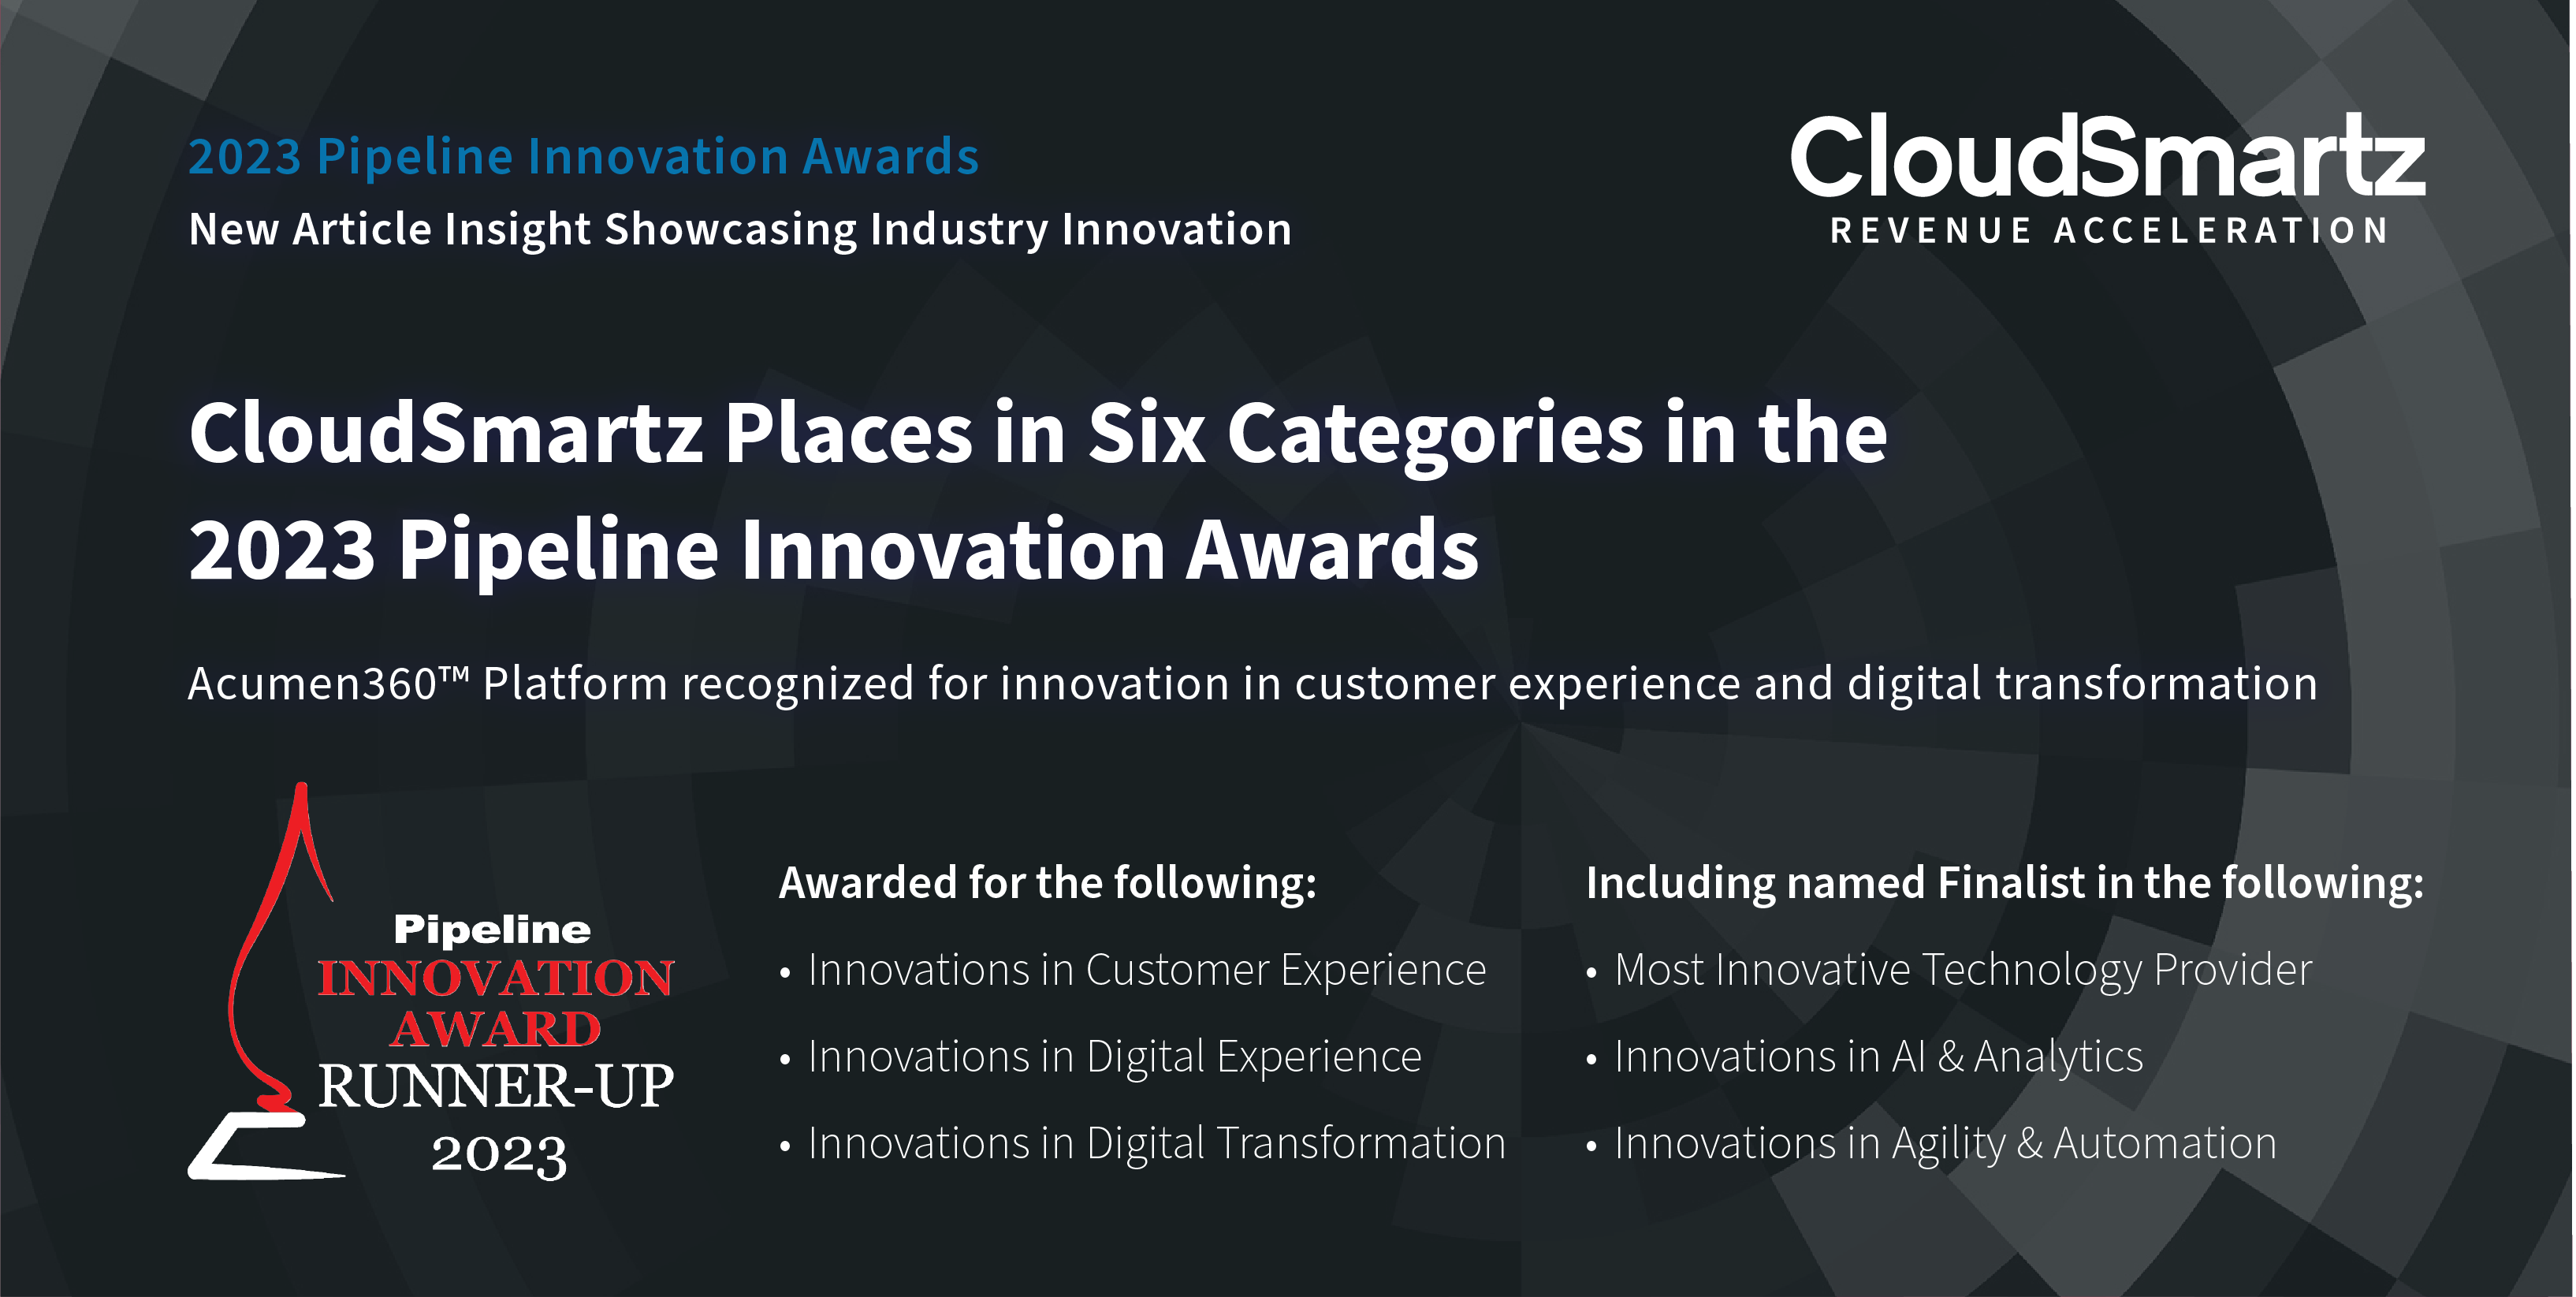 CloudSmartz Places in (6) Award Categories